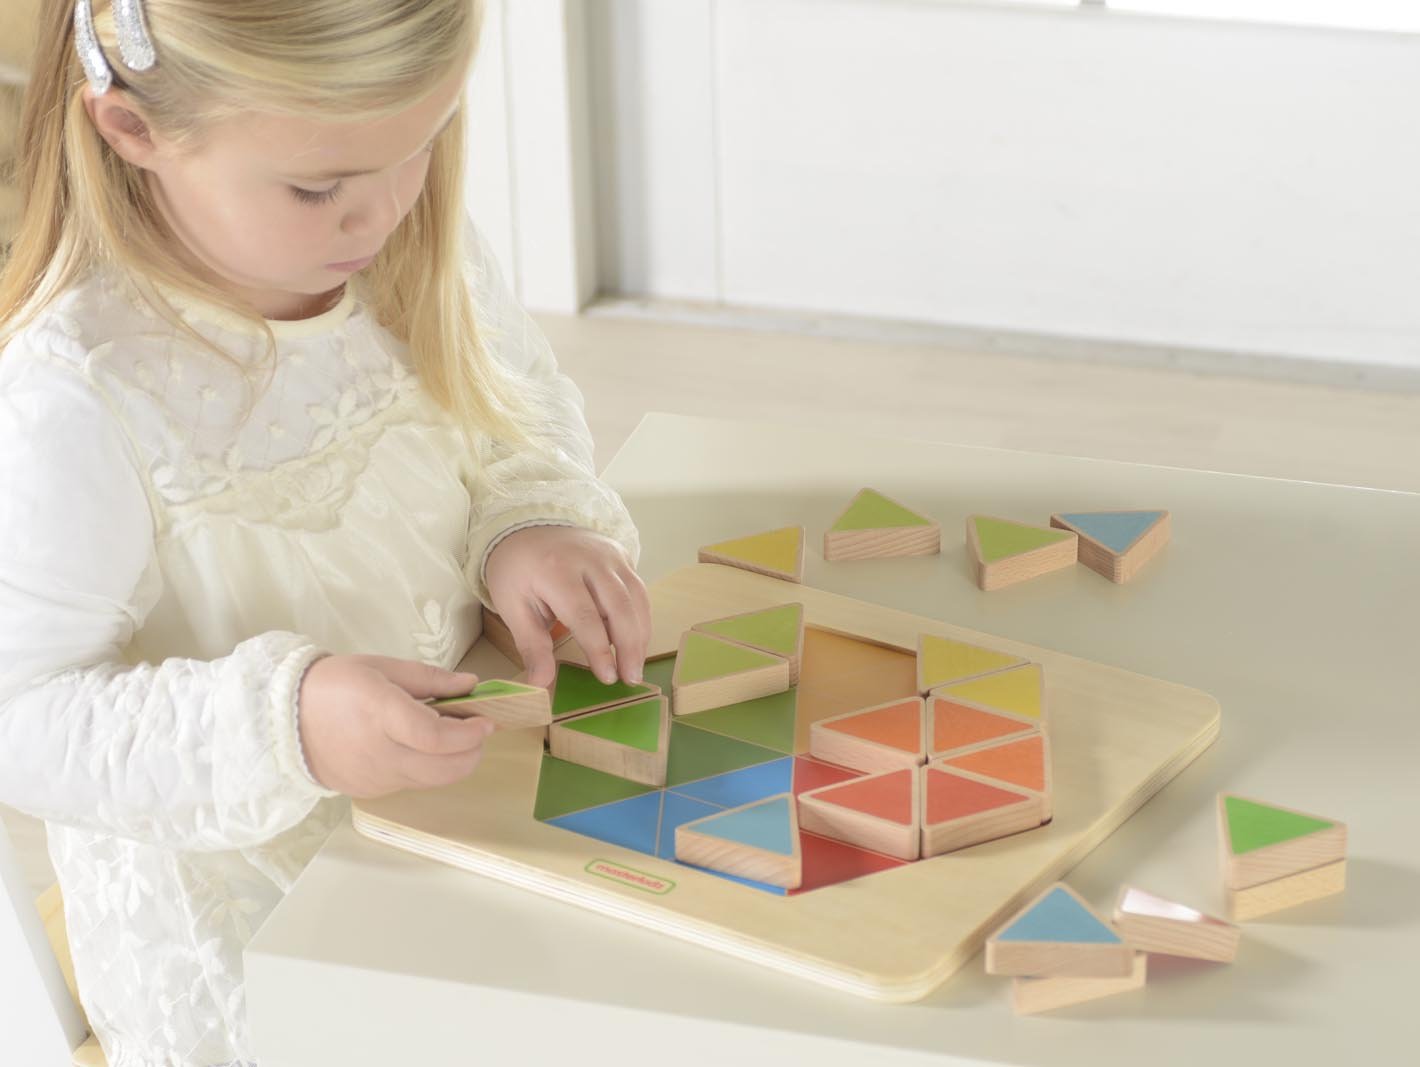 Puzzle creativ Hexagon colorat, din lemn, +3 ani, Masterkidz